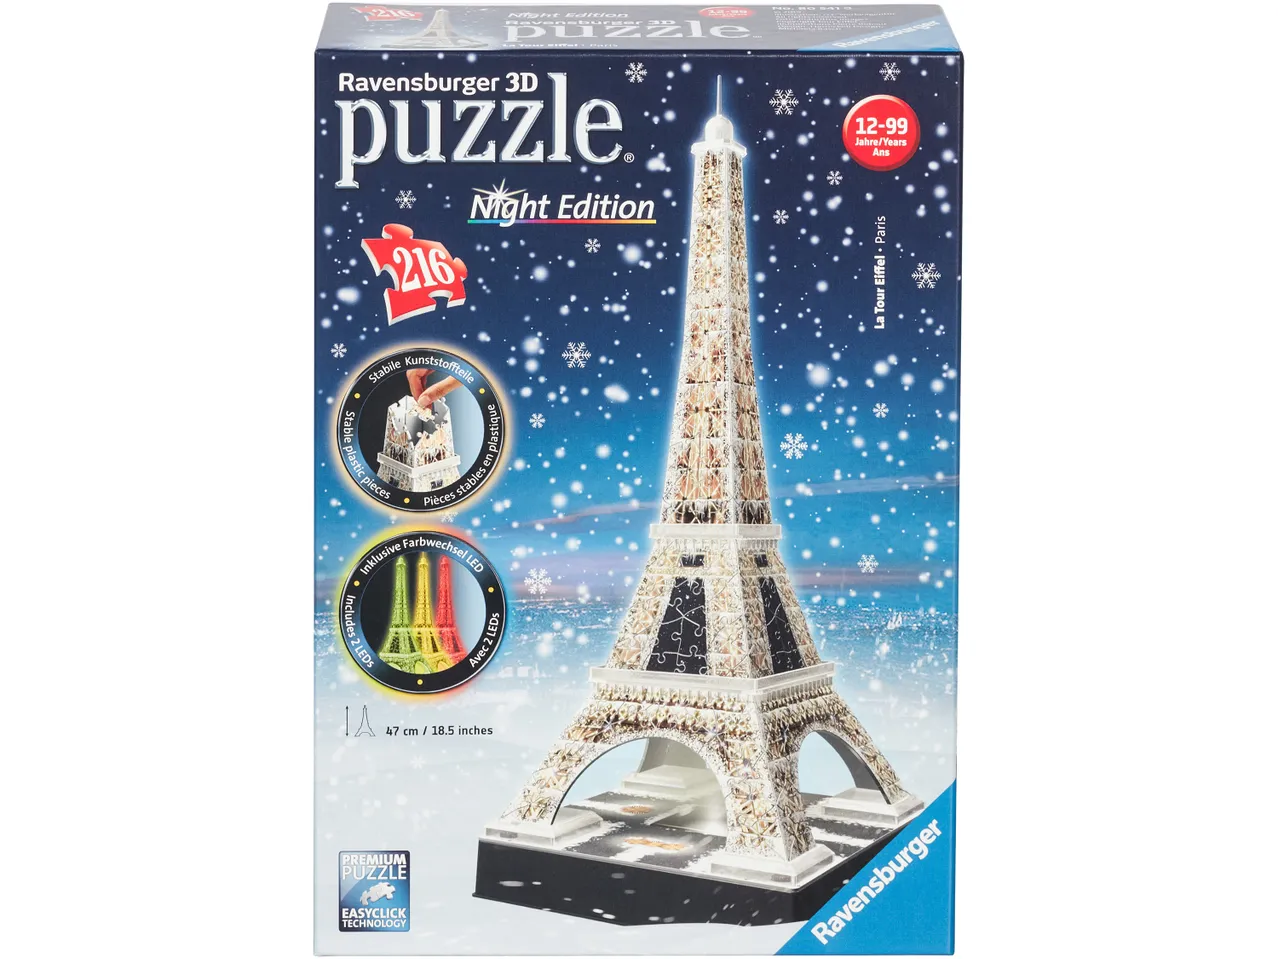 Puzzle 3D con LED , prezzo 19.99 EUR 
Puzzle 3D con LED 216 pezzi 
A scelta fra
- ...